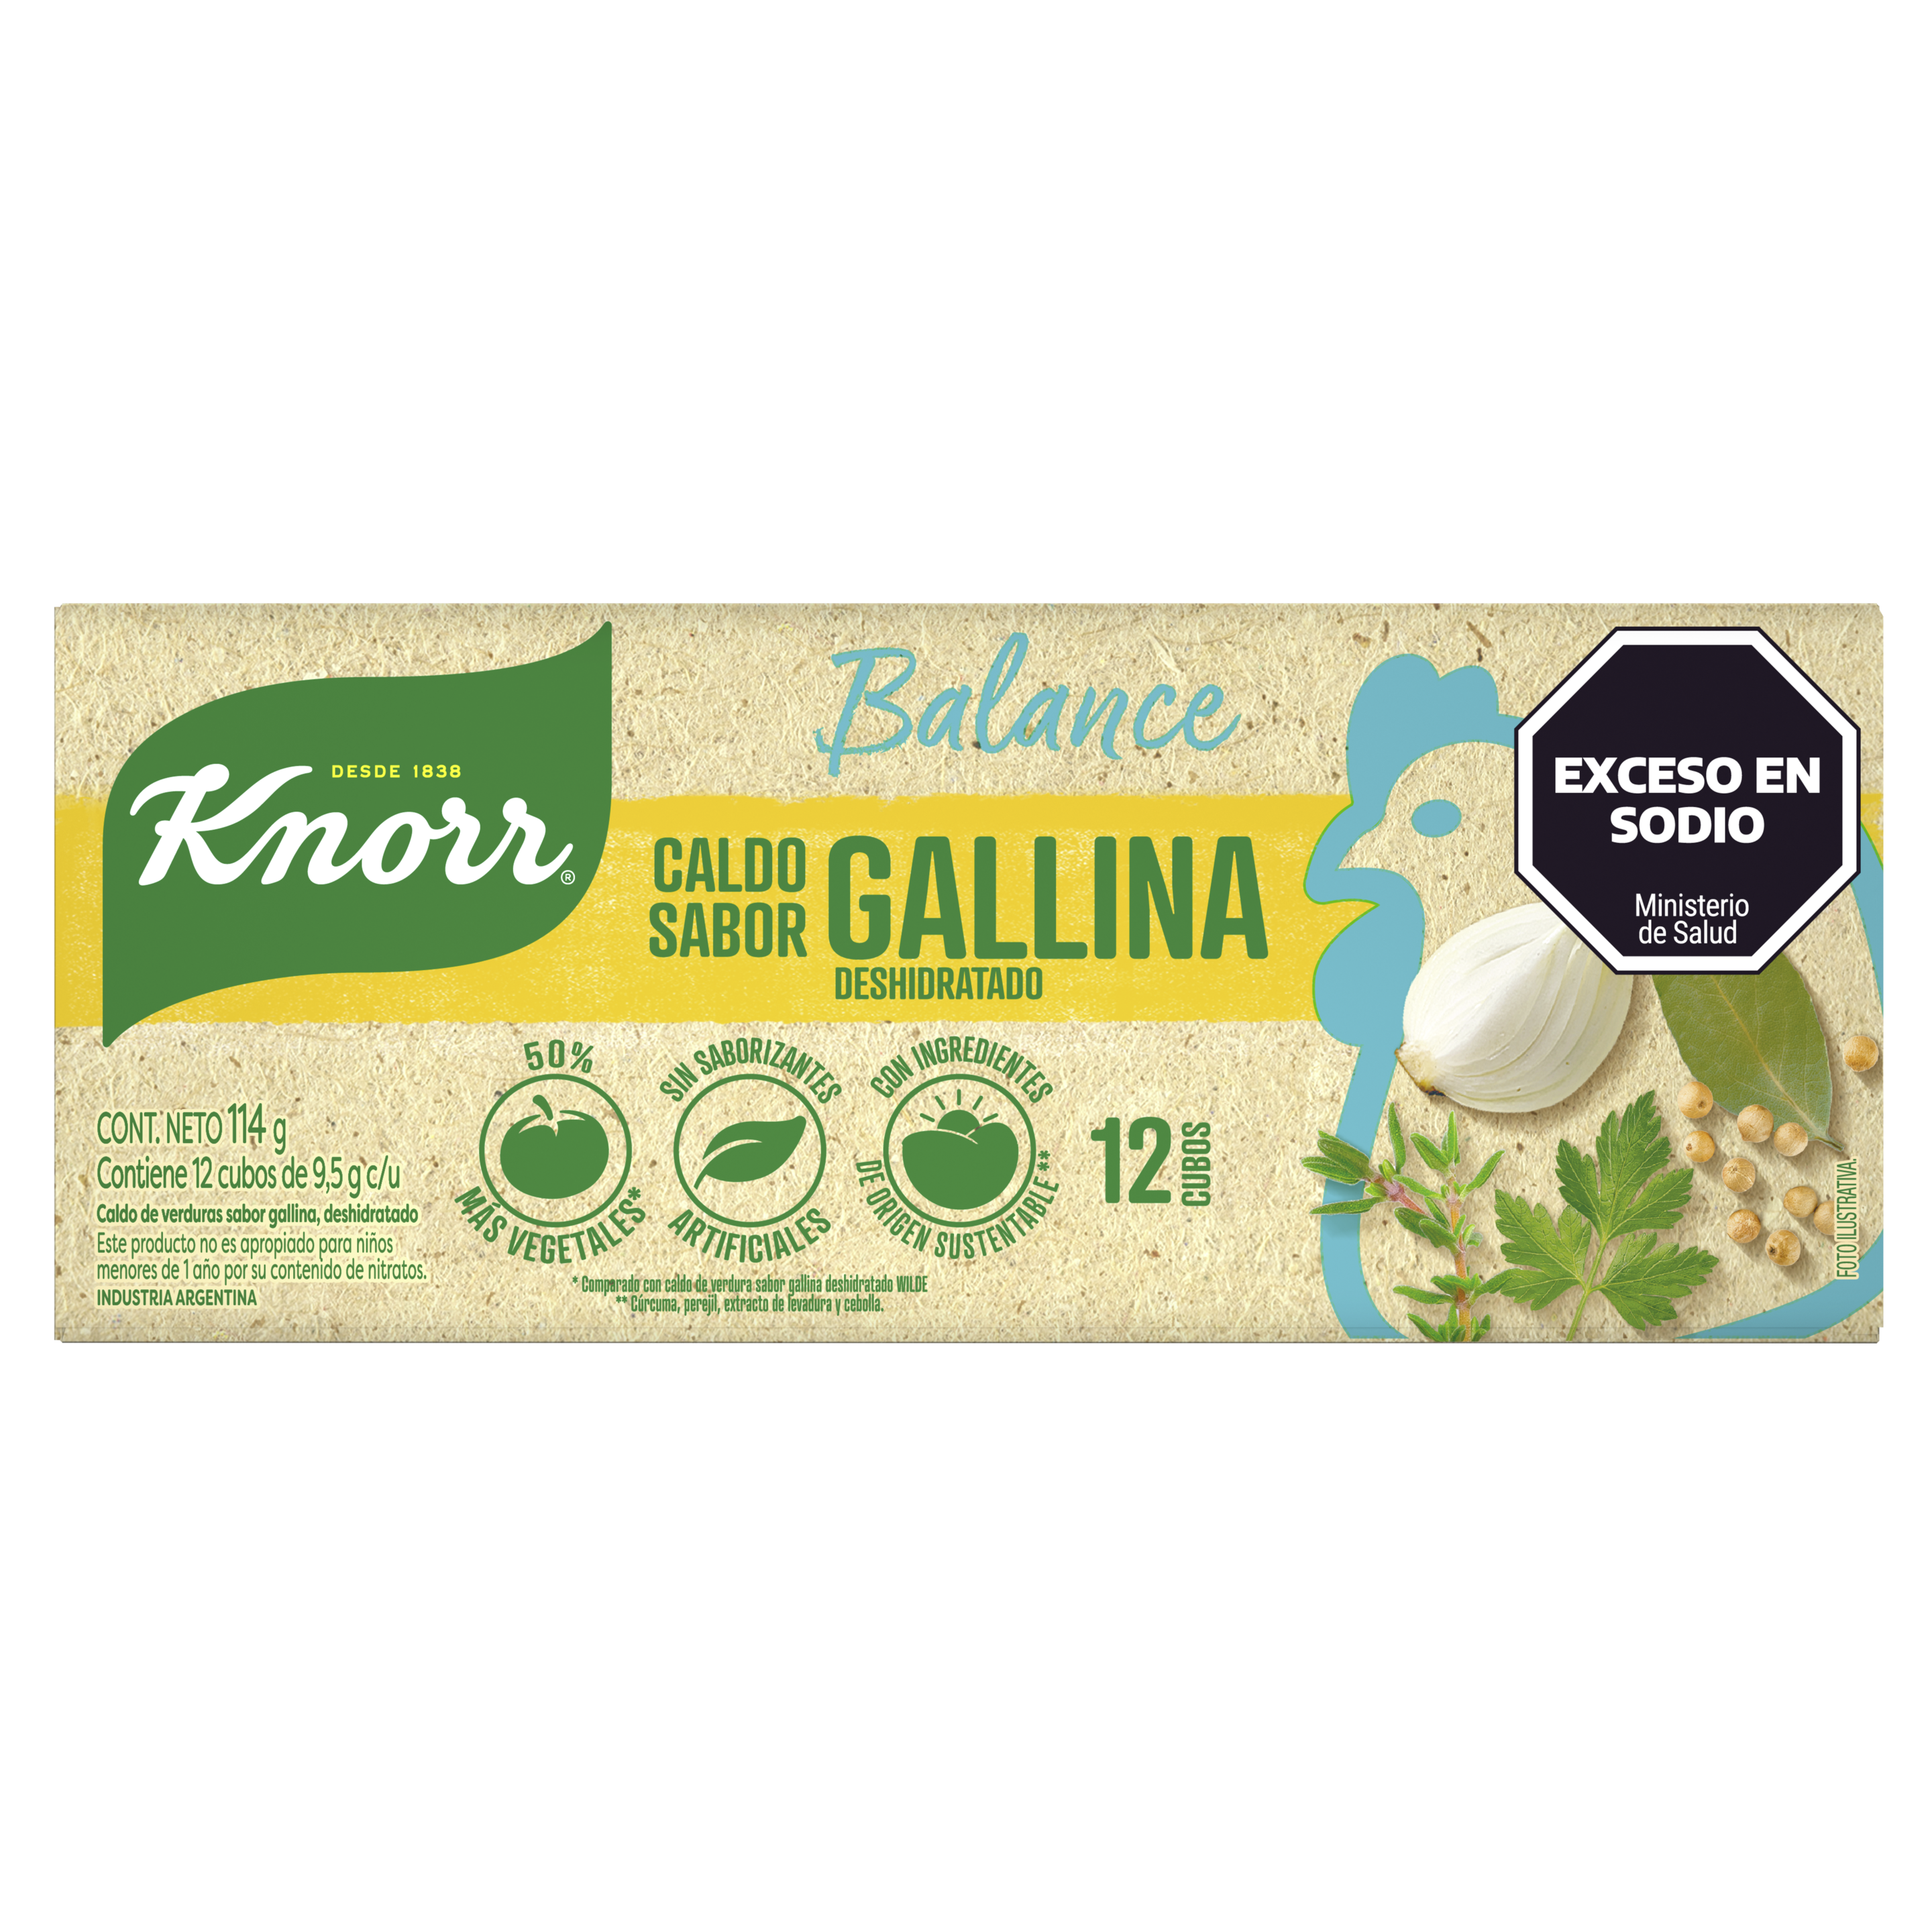 Imagen de envase Caldo Balance de Gallina x12 cubos Knorr